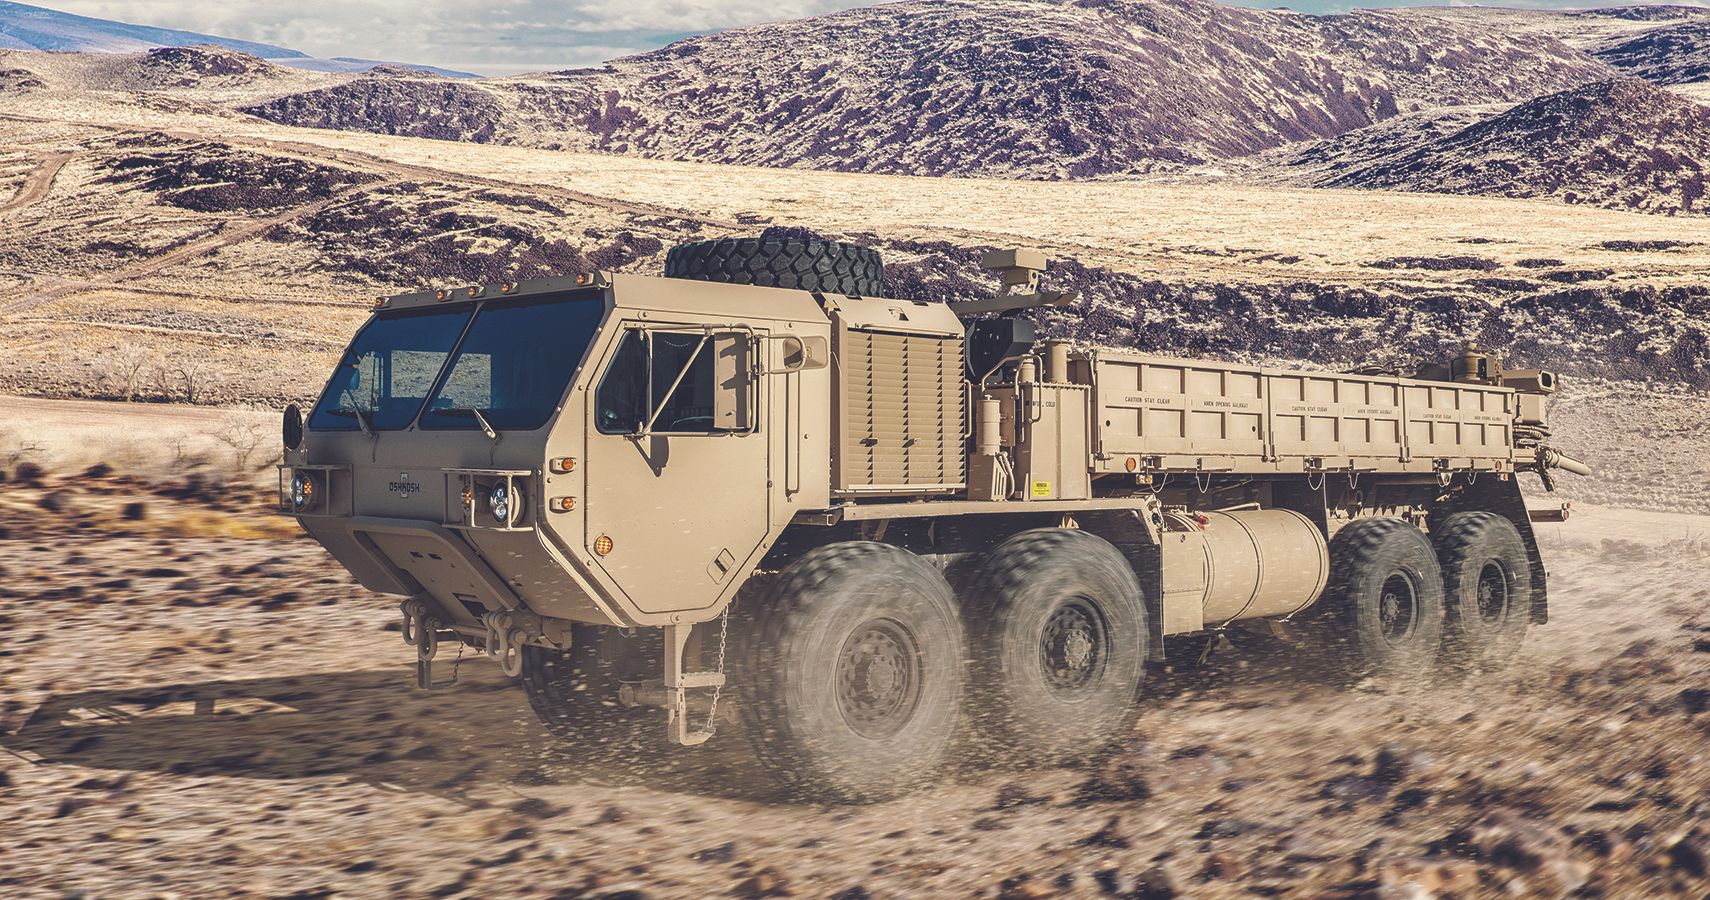 Oshkosh To Modernize U.S. Army Vehicles For 346 Million